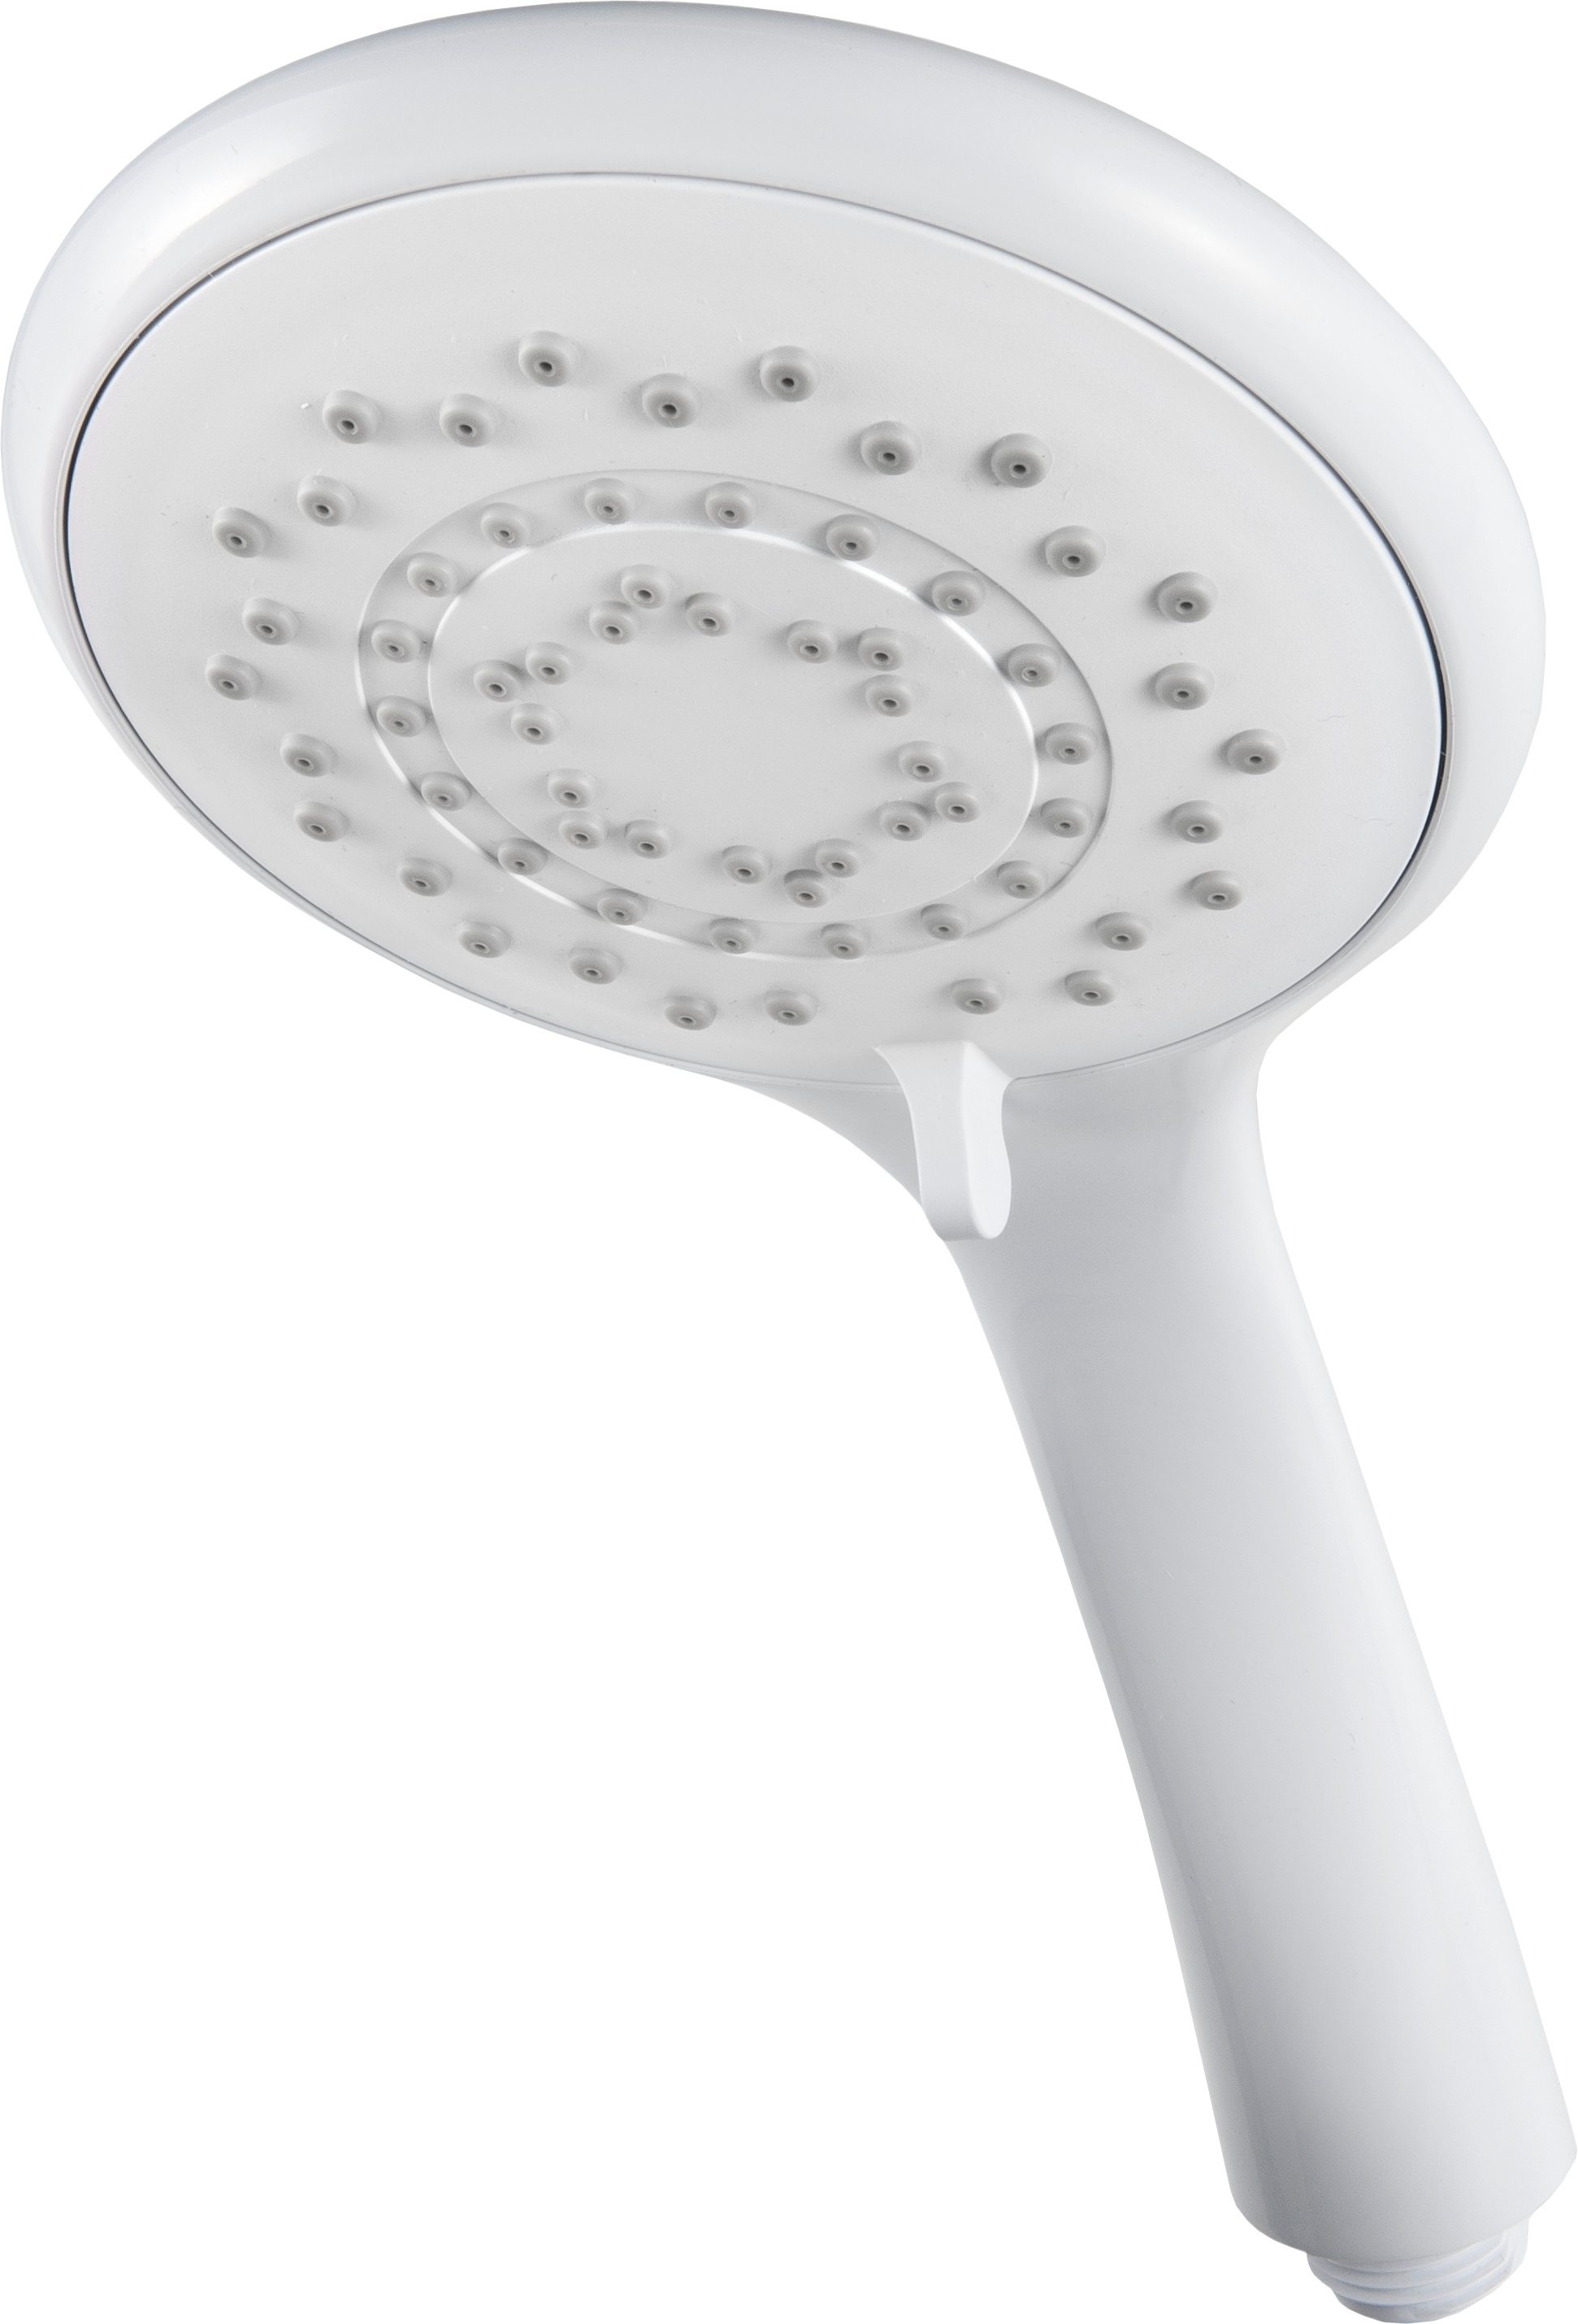 Triton 5 Position Spray Shower Head Strong Water Pressure Bath Bathroom Silver 